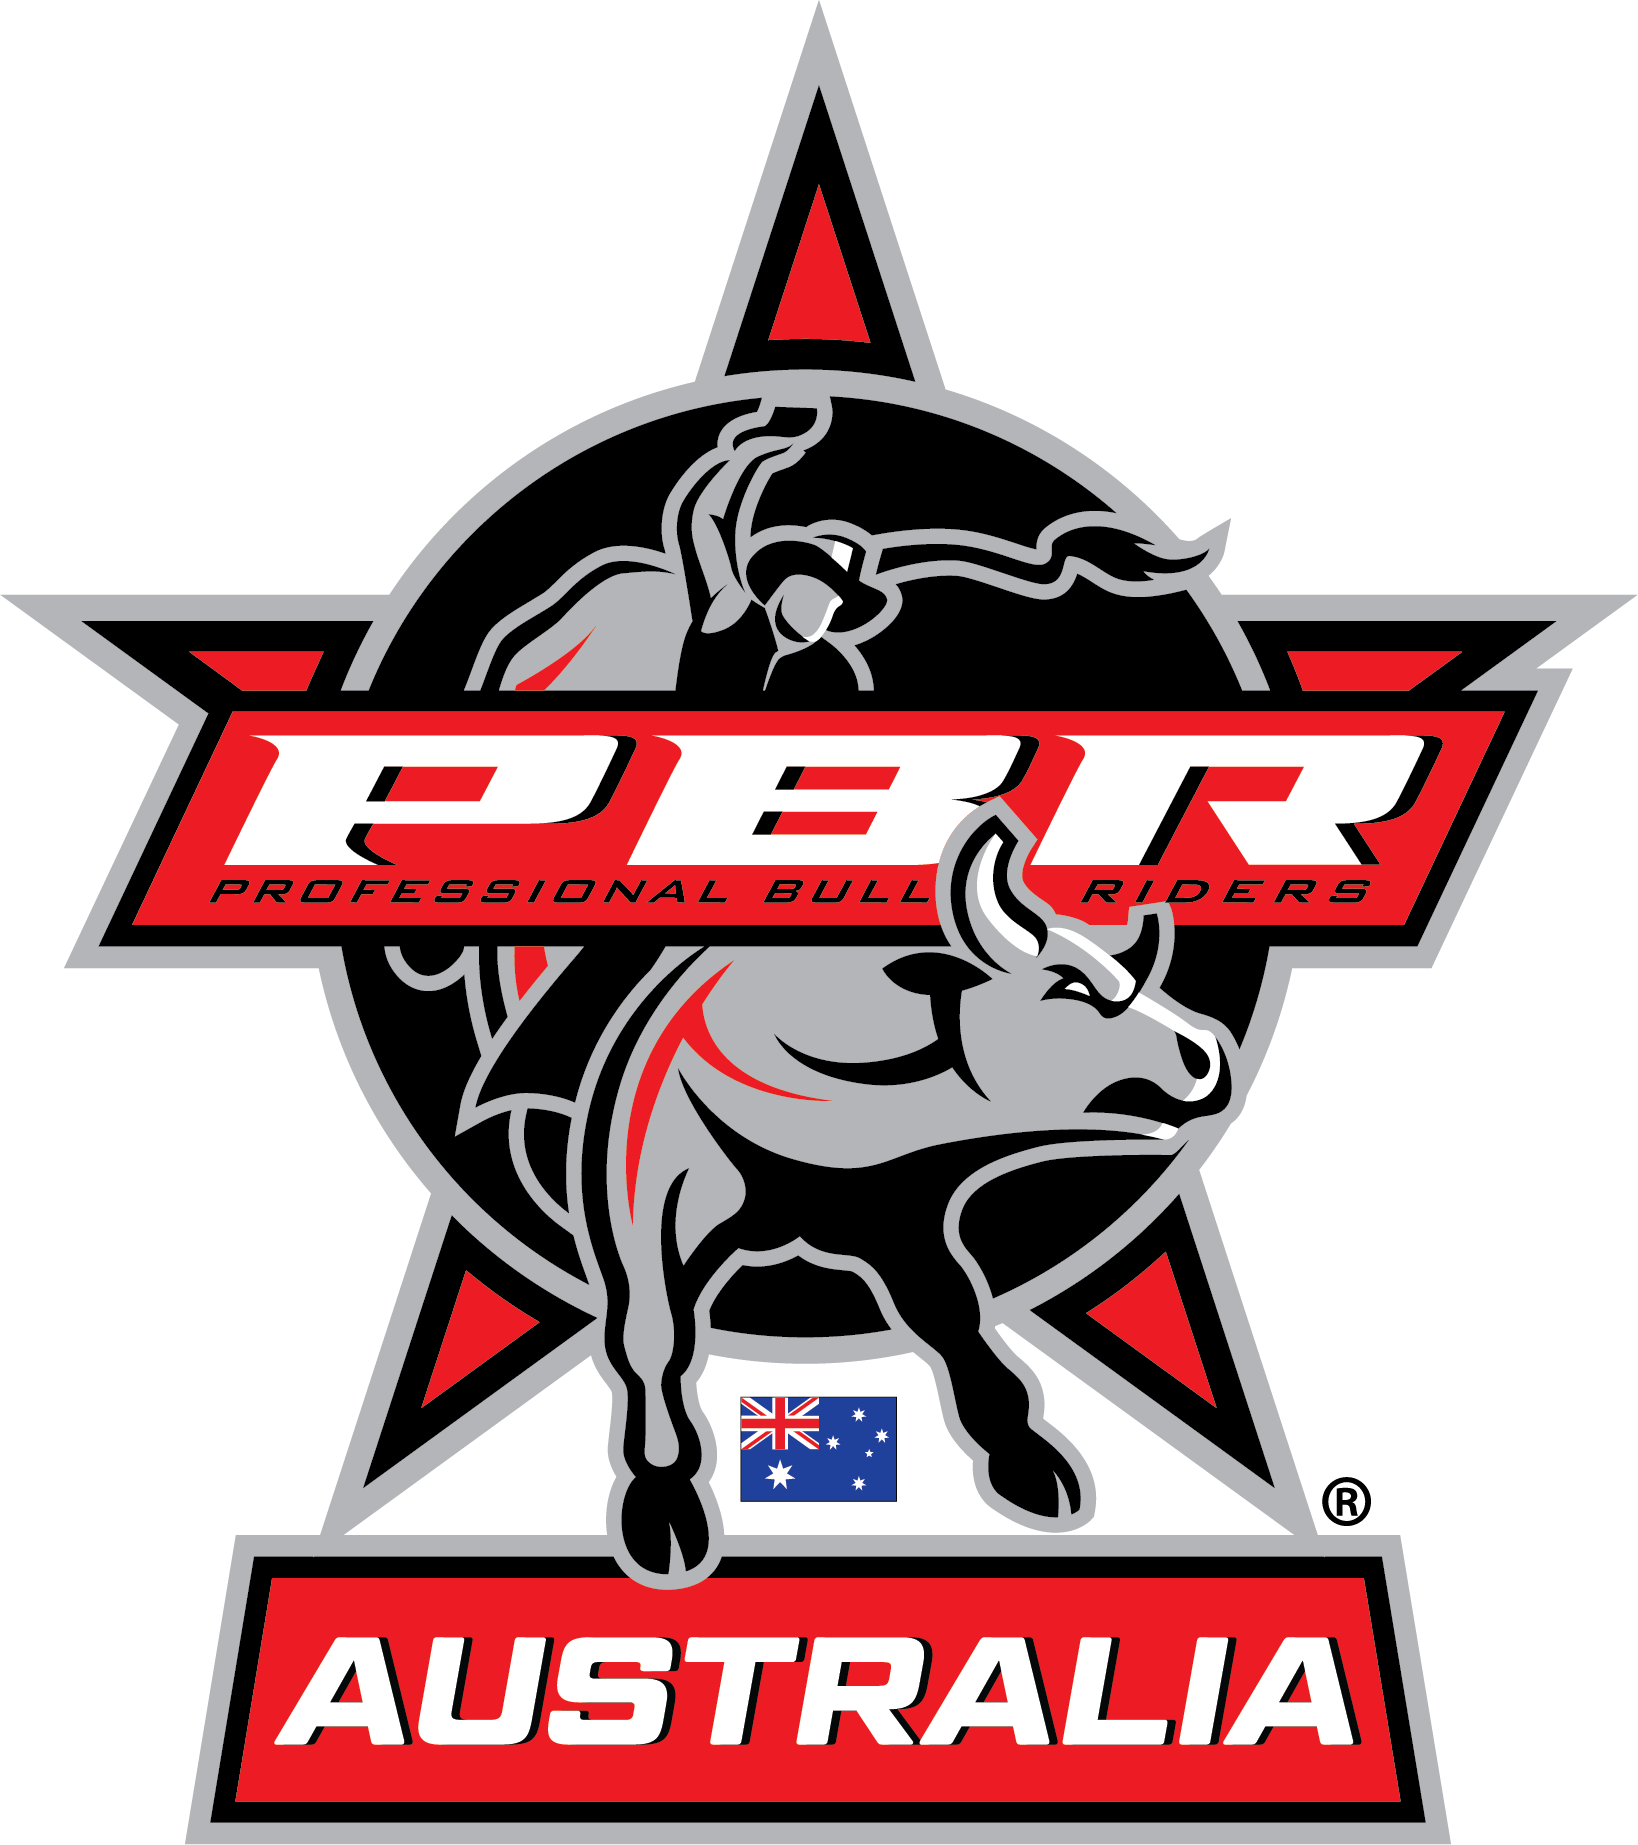 PBR Australia logo